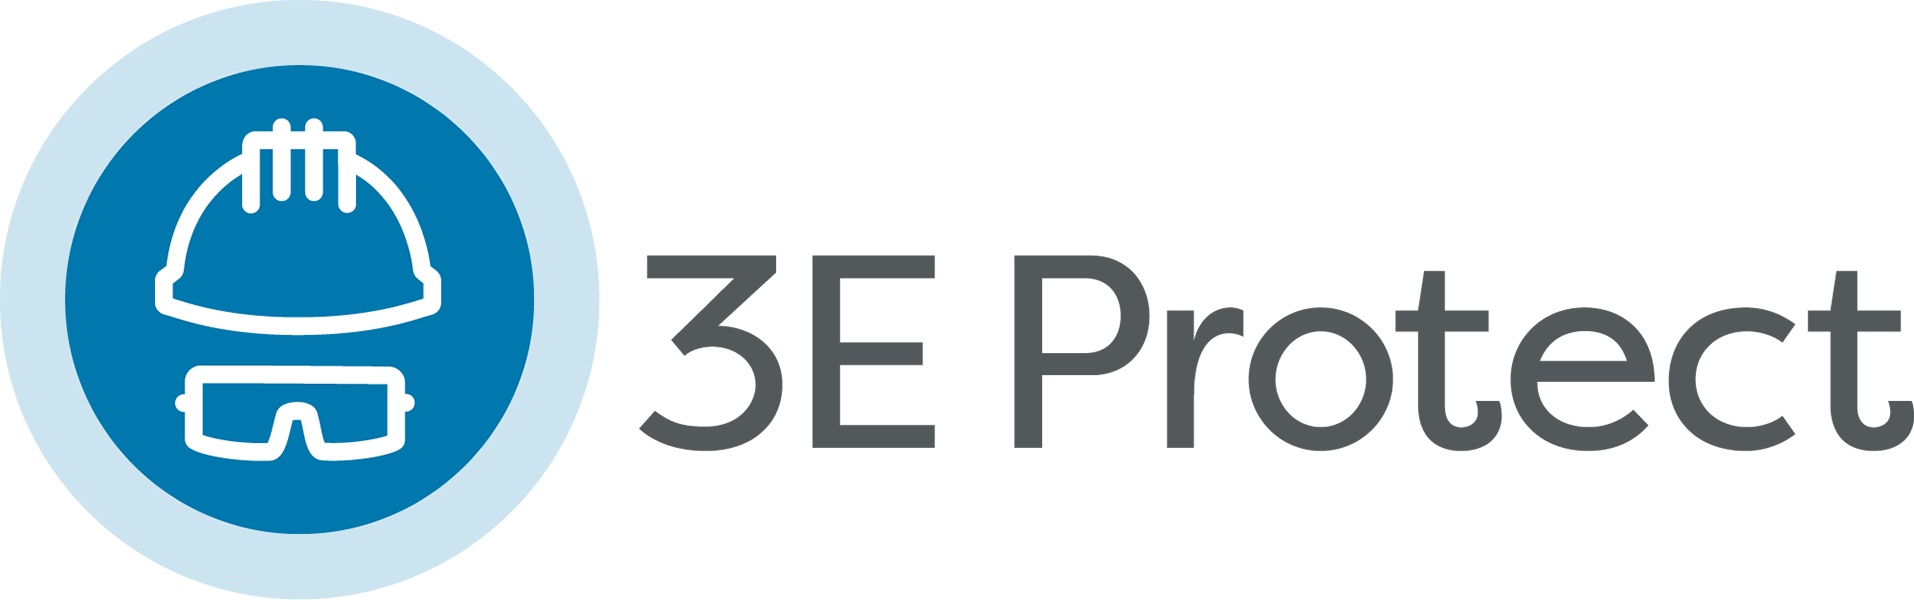 3e-protect-logo-color-rgb.png